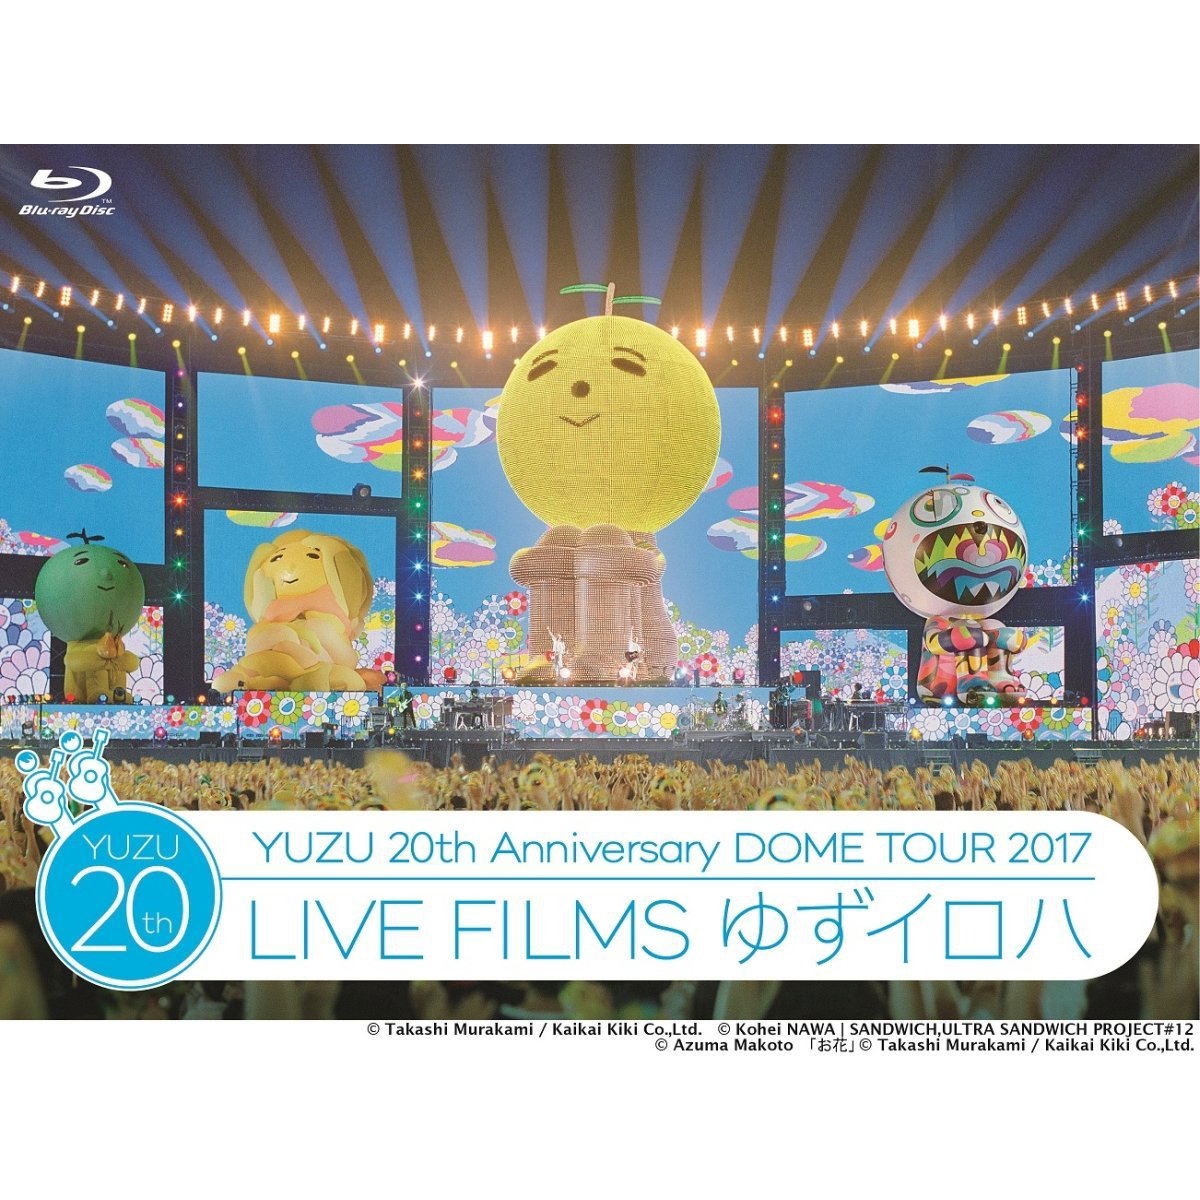 20th Anniversary Dome Tour 2017 - Live Films Yuzu Iroha